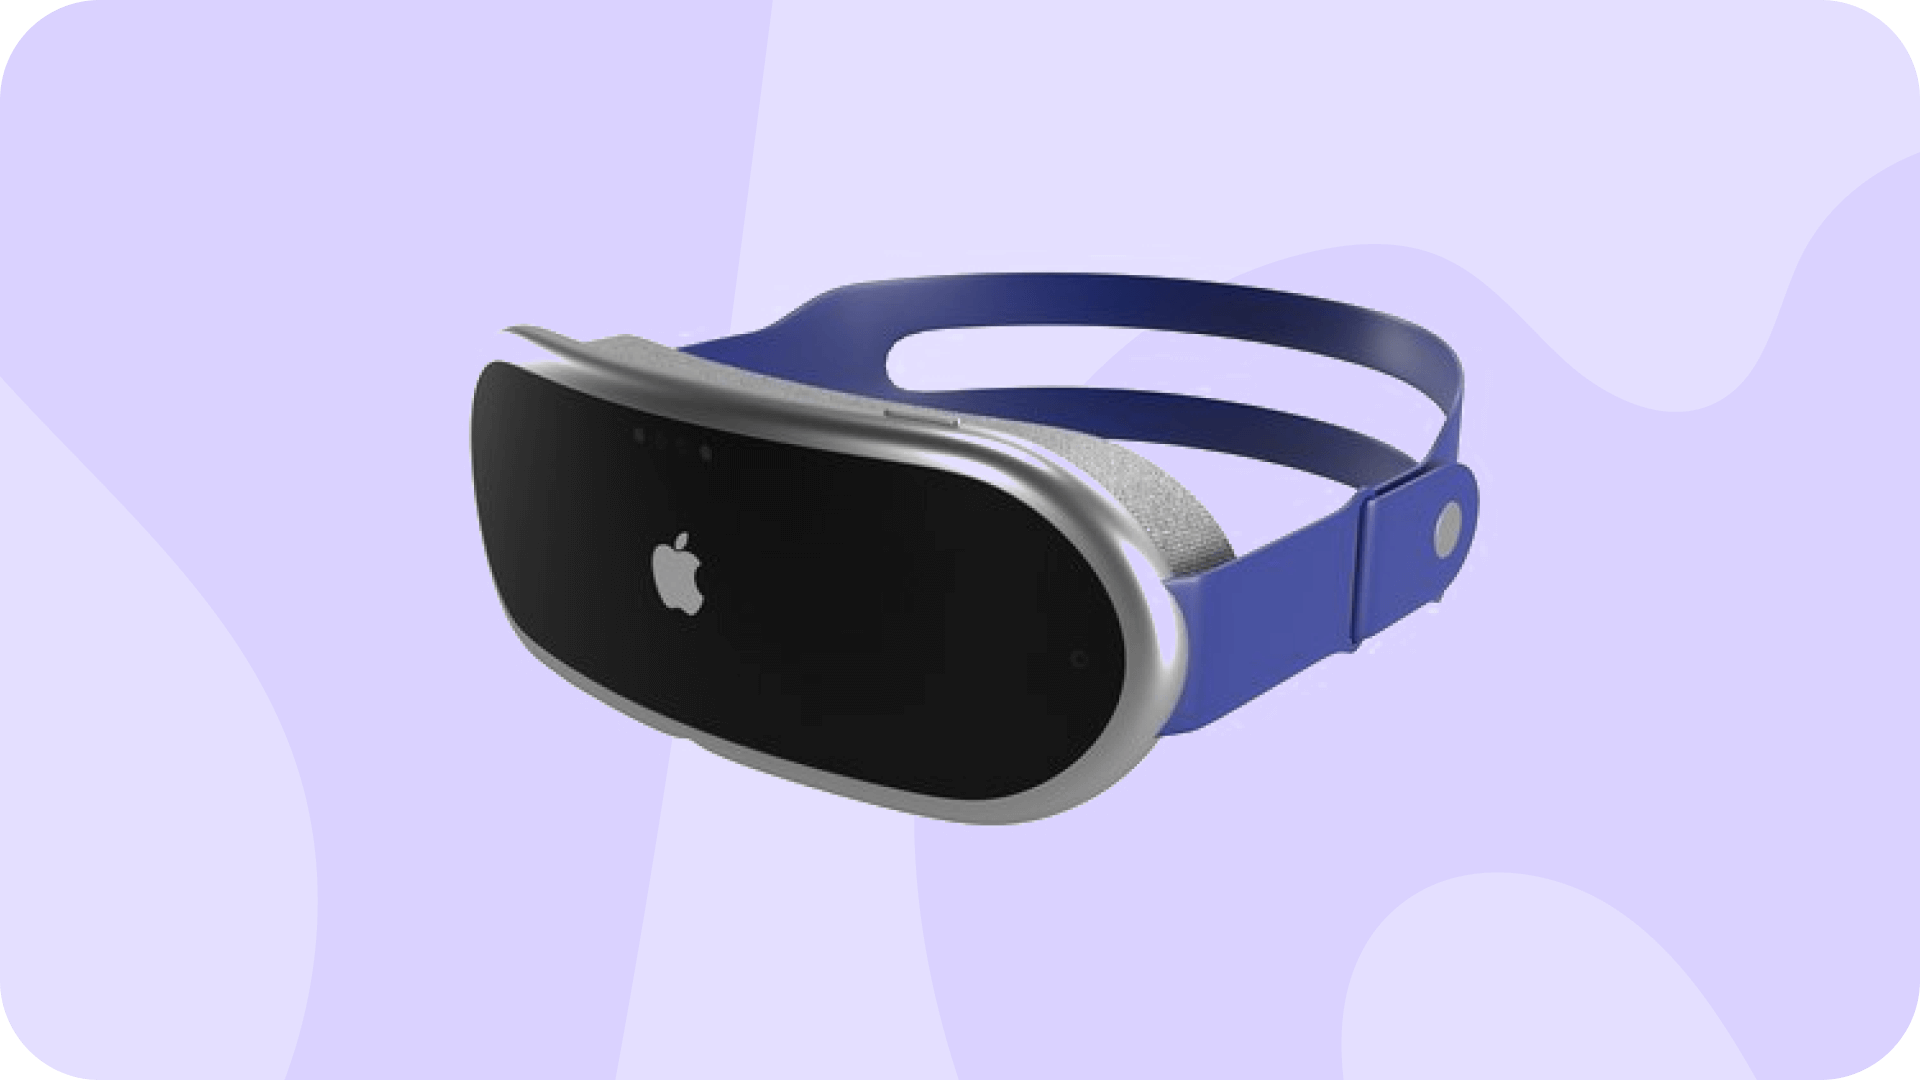 An Apple VR headset